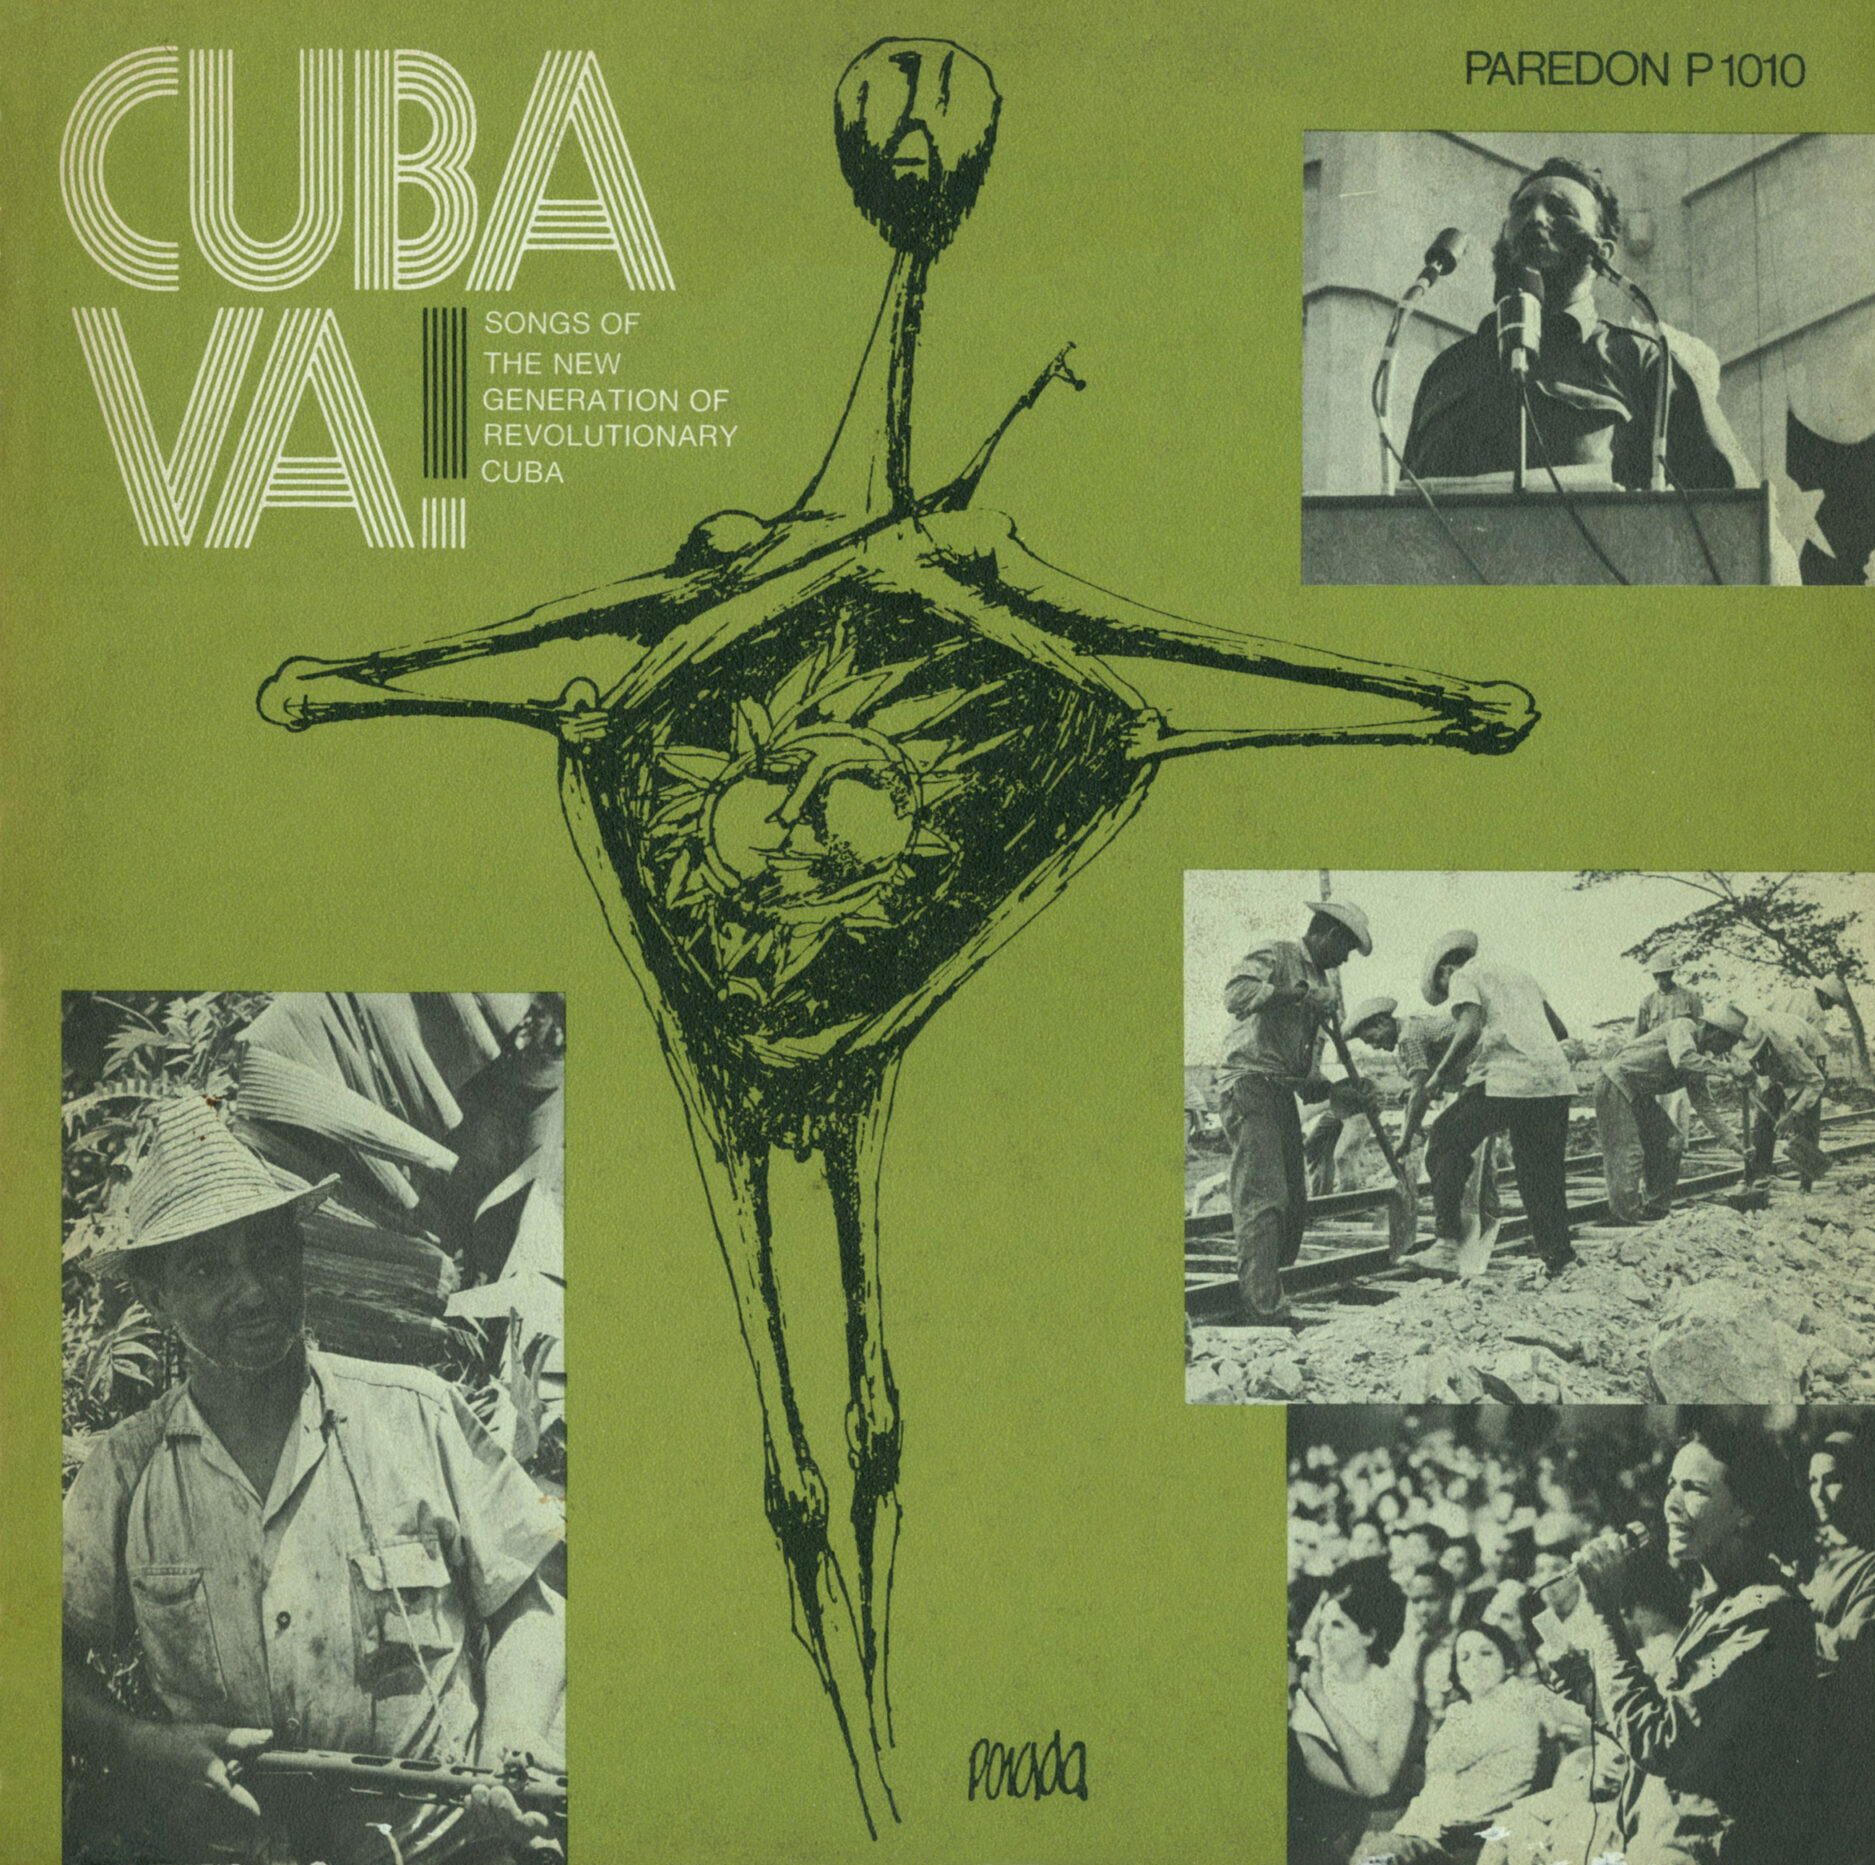 Cuba va! Songs of the New Generation of Revolutionary Cuba